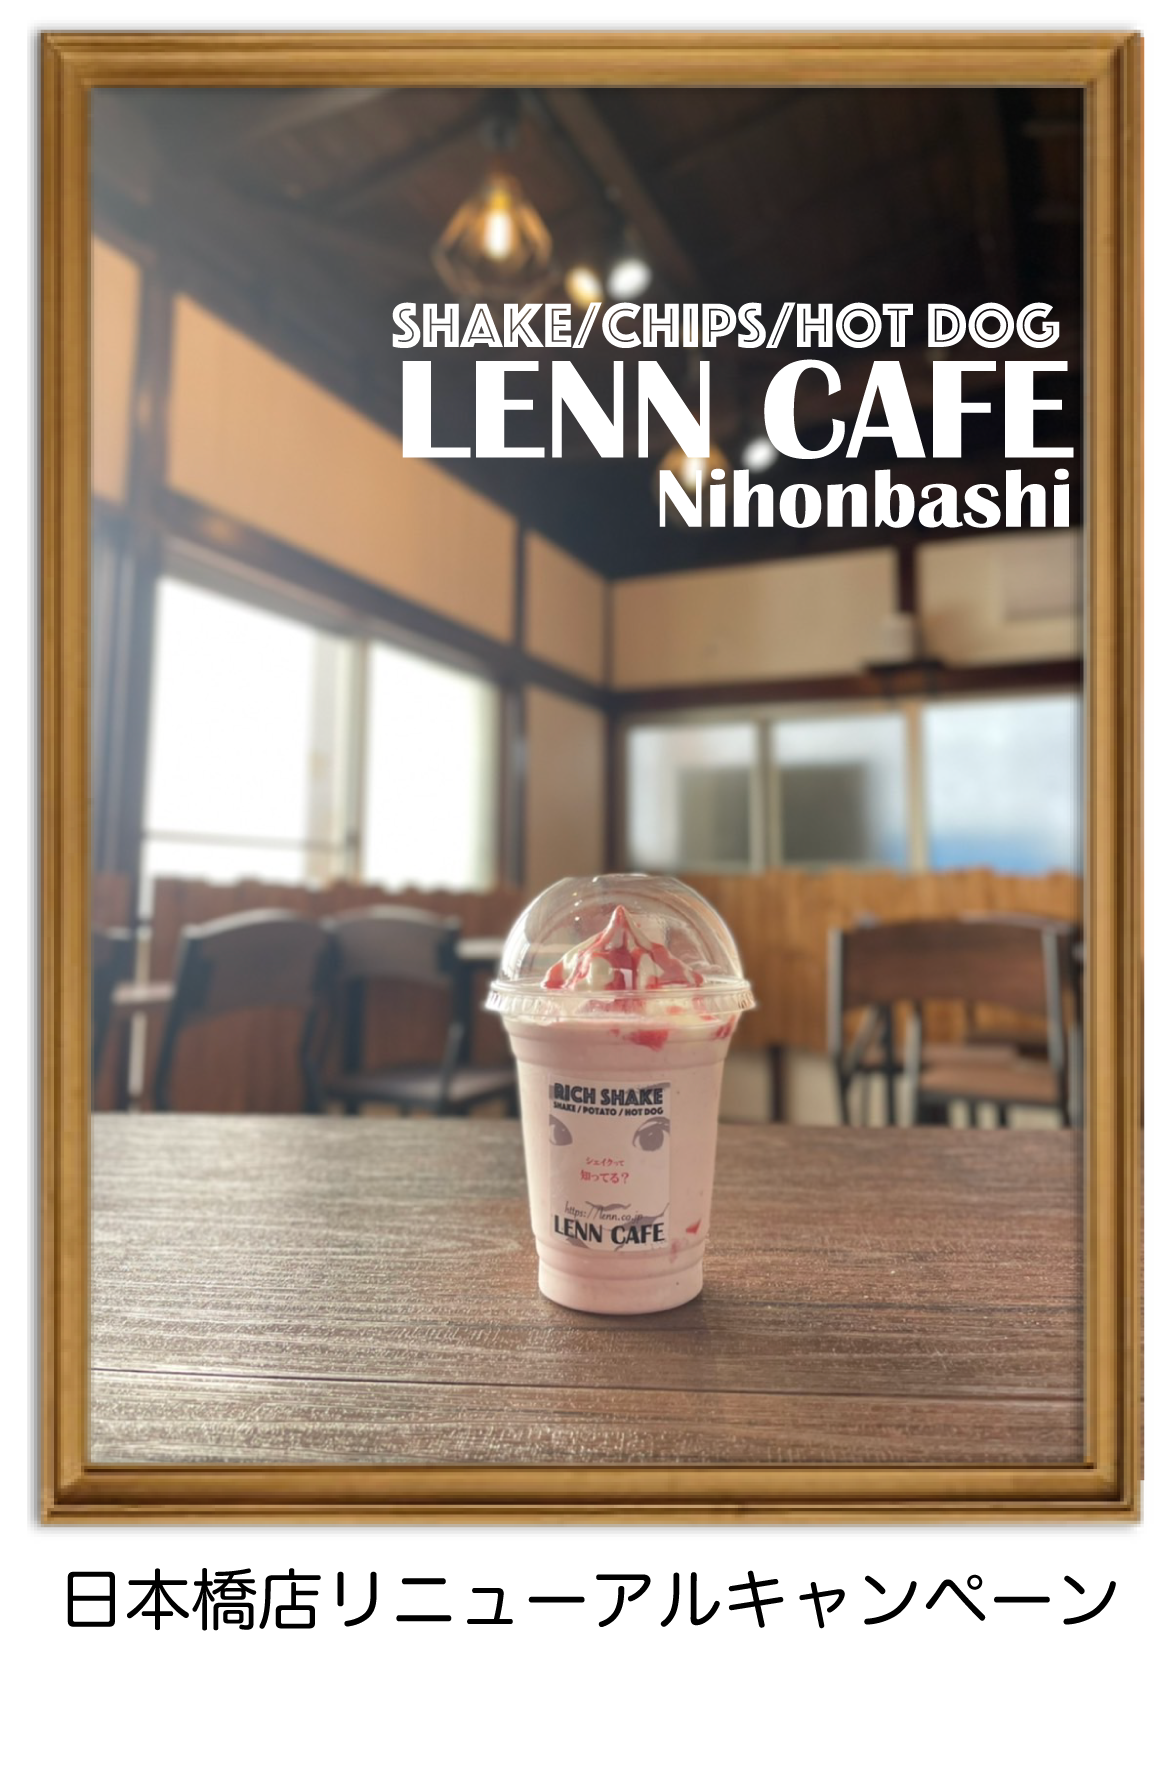 LENN CAFE日本橋店OPENキャンペーン本日の半額